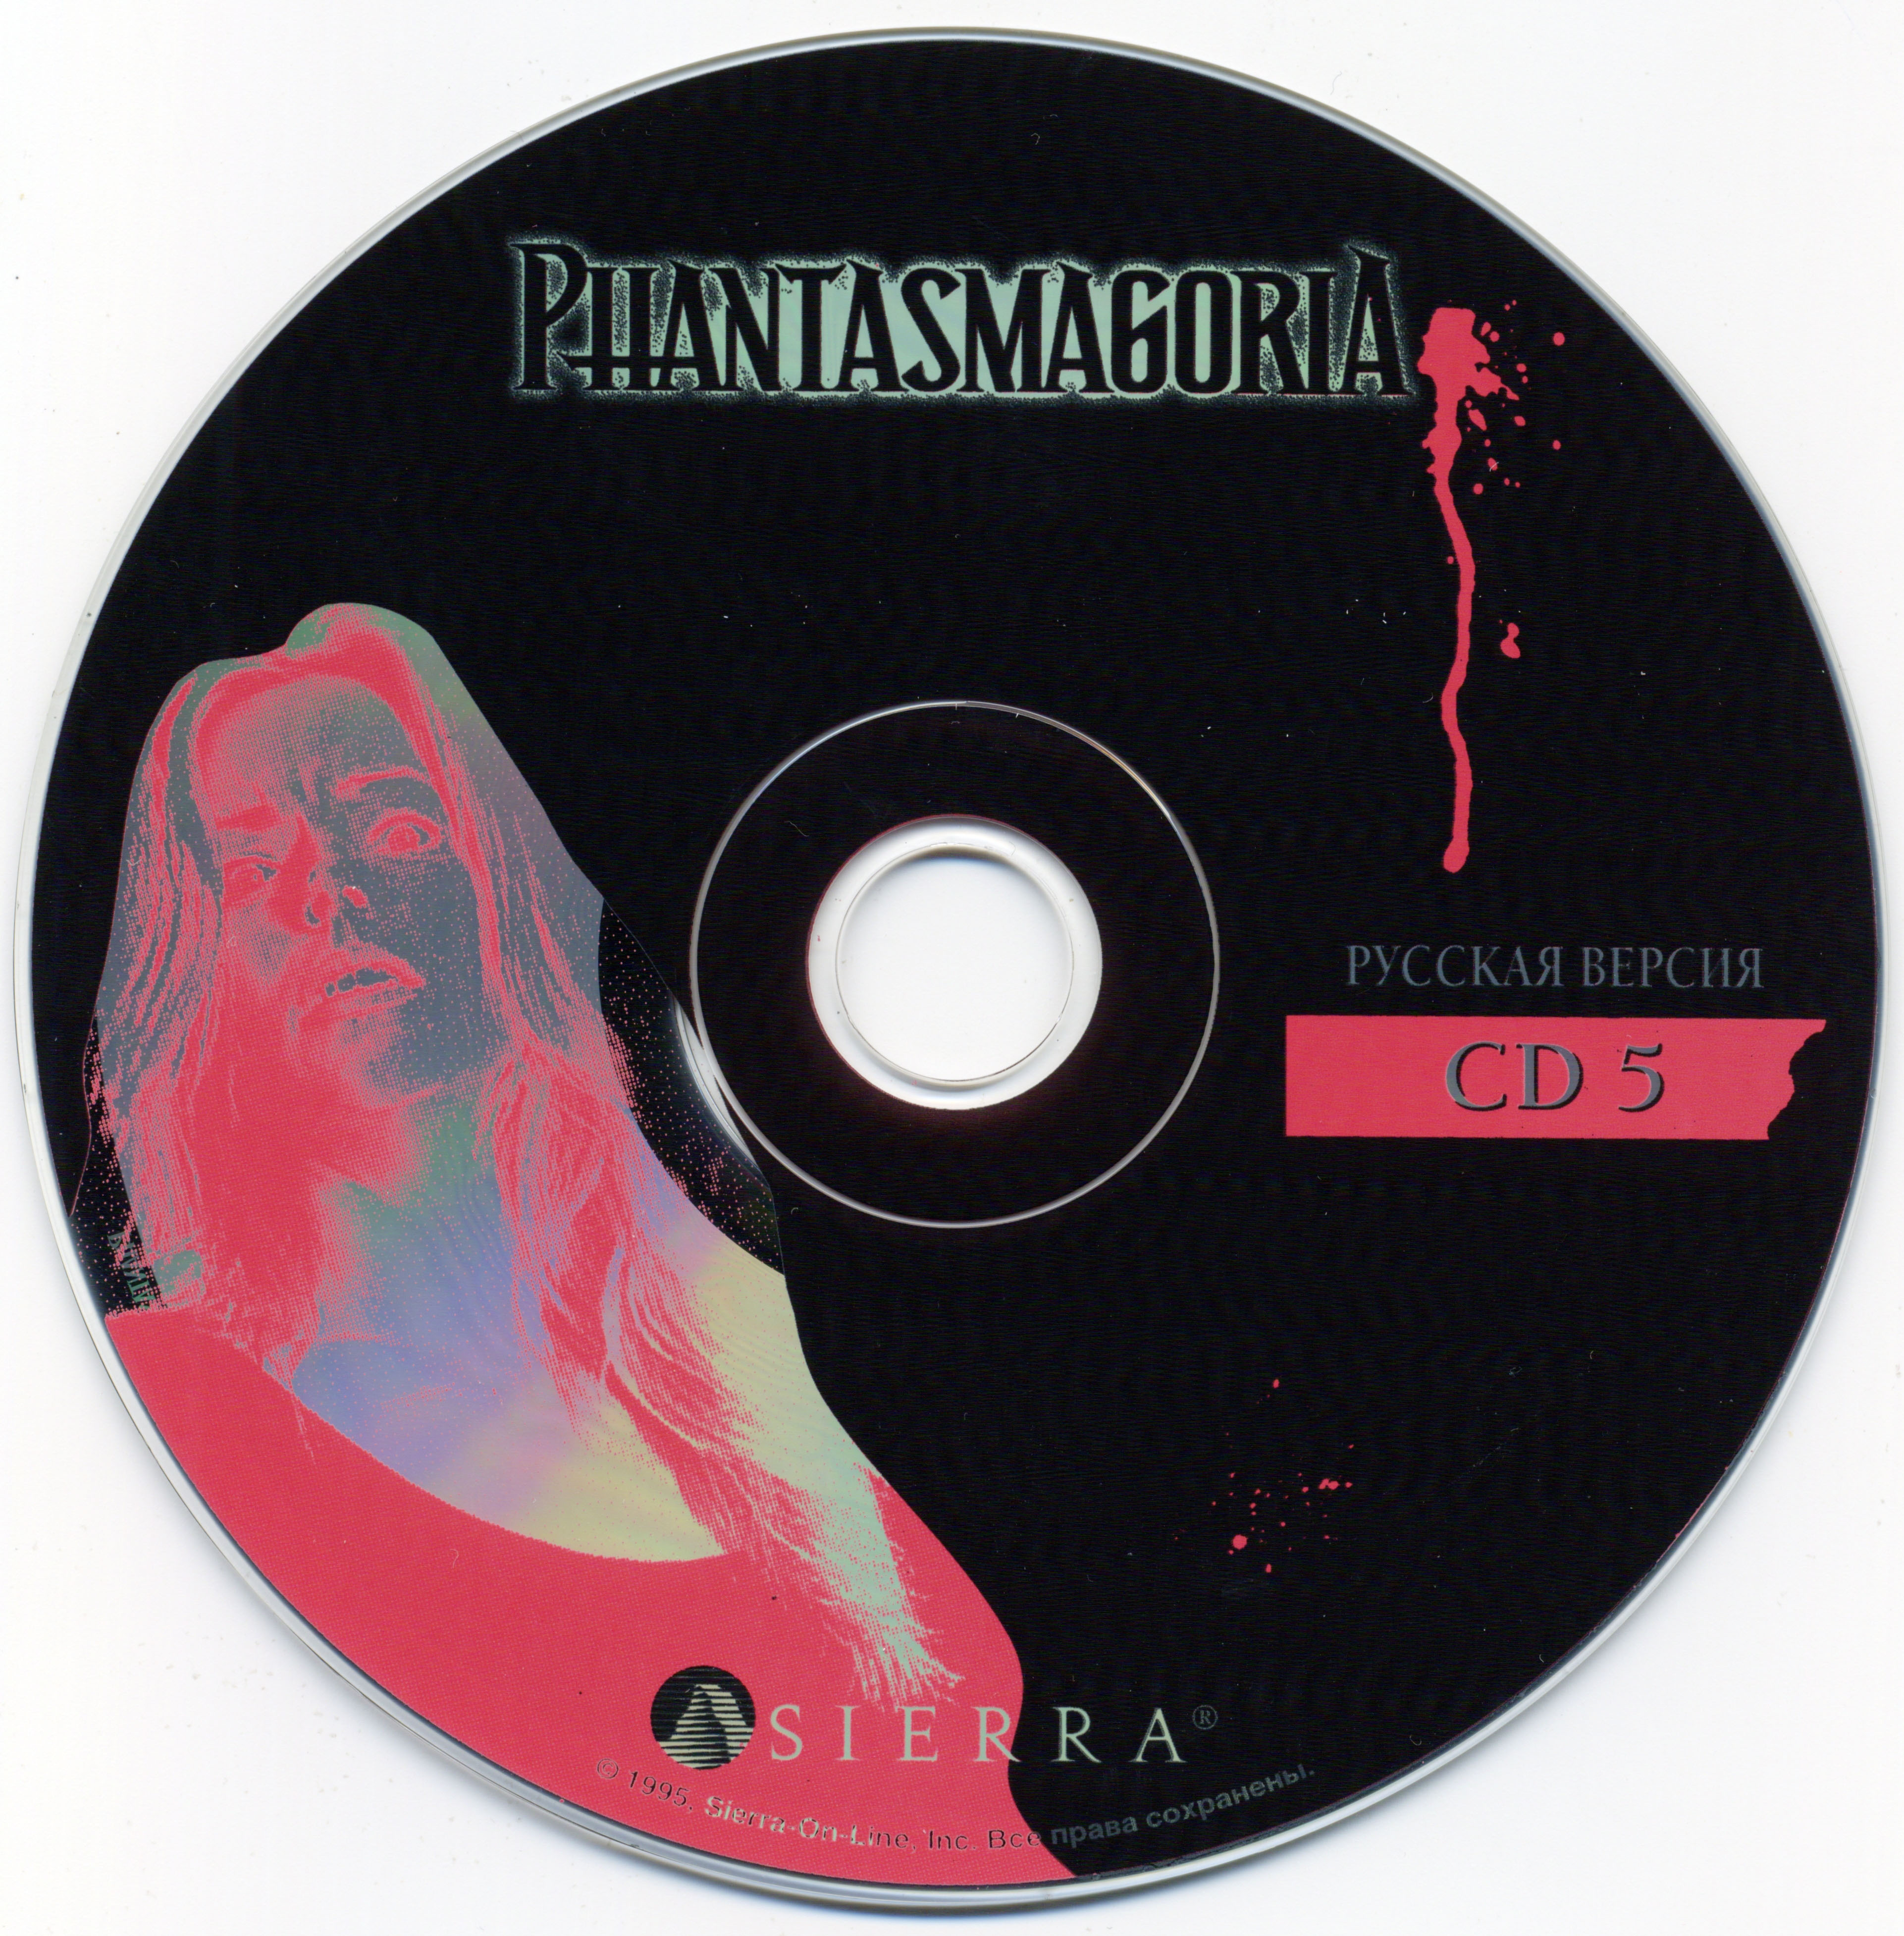 Roberta Williams' Phantasmagoria. Vita Phantasmagoria. DJ Phantasmagoria. The Damned Phantasmagoria.